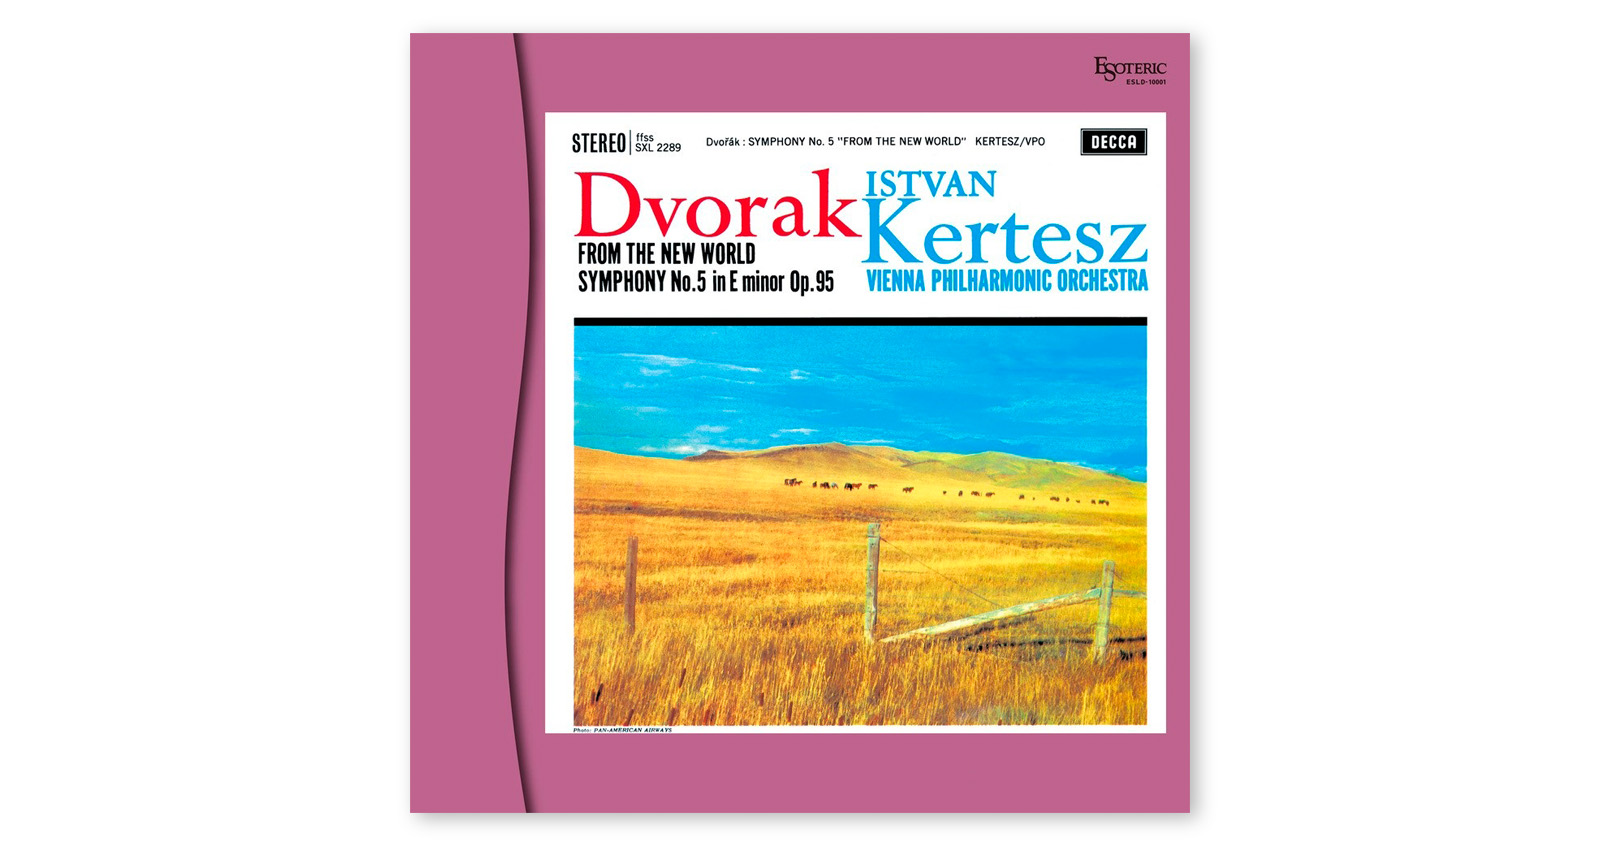  Antonín Dvořák: Symphony No.9 in E minor, Op.95 From the New World, István Kertész/Vienna Philharmonic - LP 180g Vinyl, Limited, Remastered